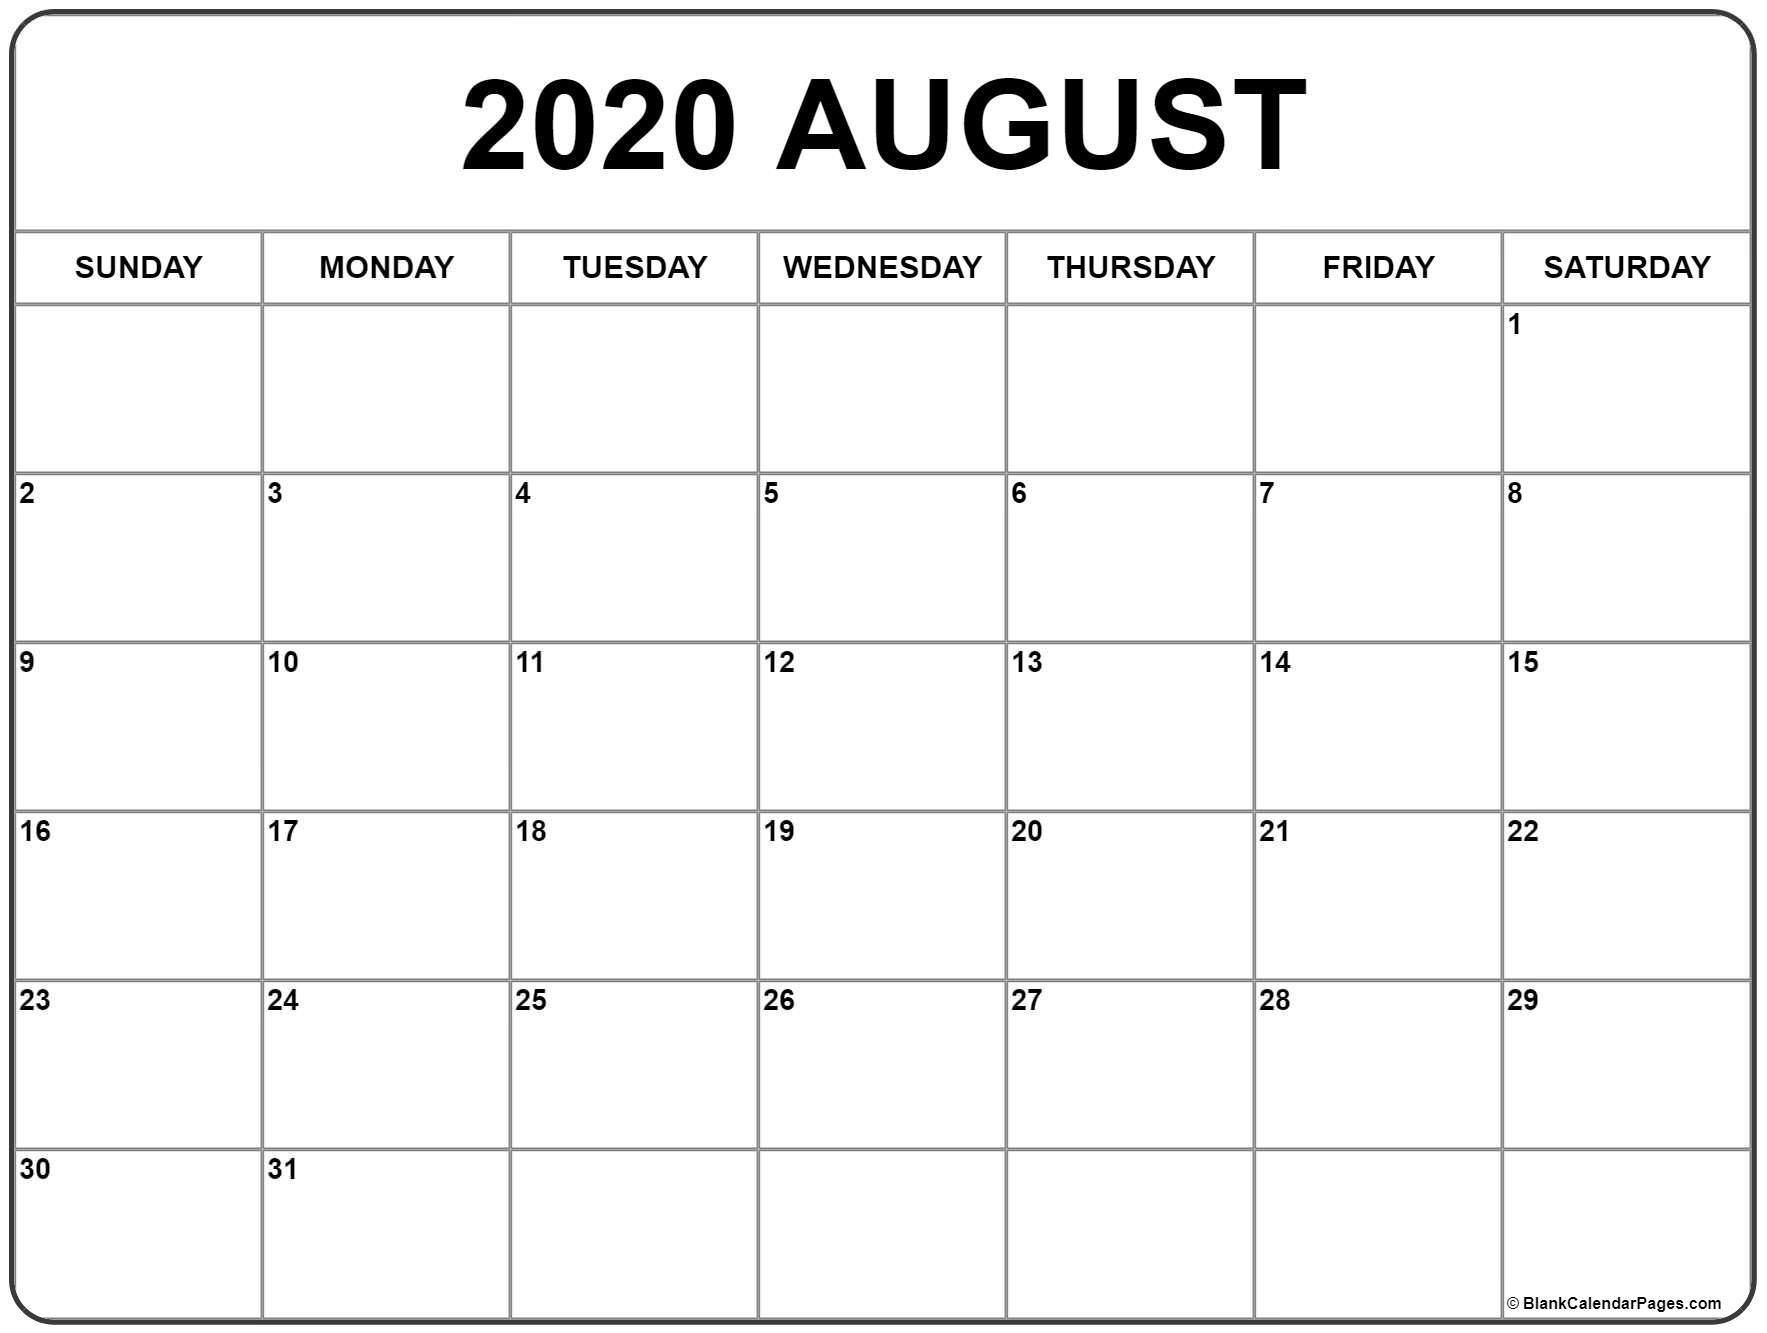 August 2020 Calendar | Free Printable Monthly Calendars  August 2020 Calendar